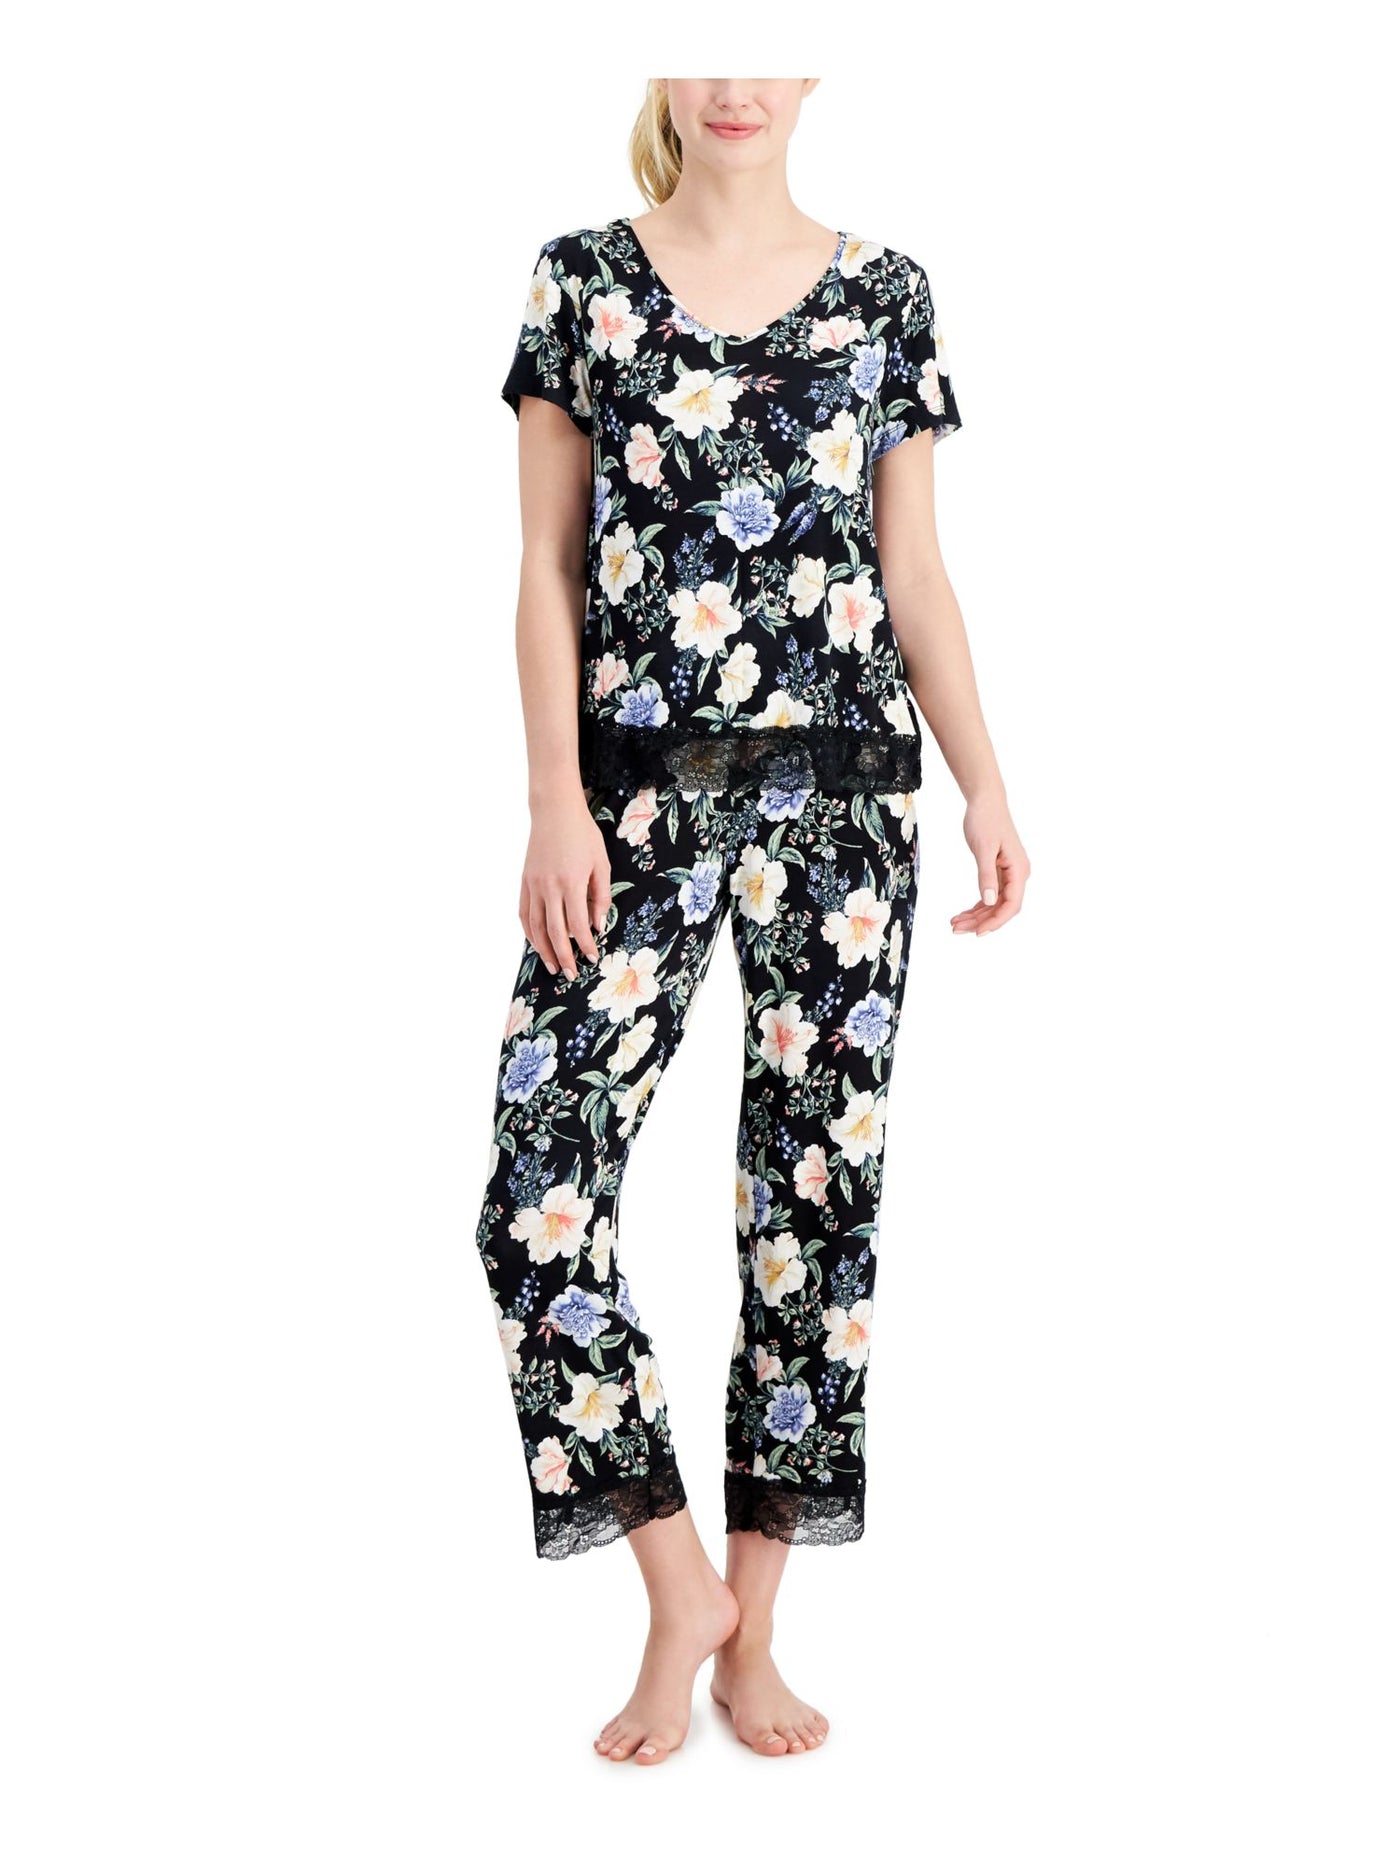 CHARTER CLUB Intimates Black Short Sleeve Pullover Floral Sleep Shirt Pajama Top XL